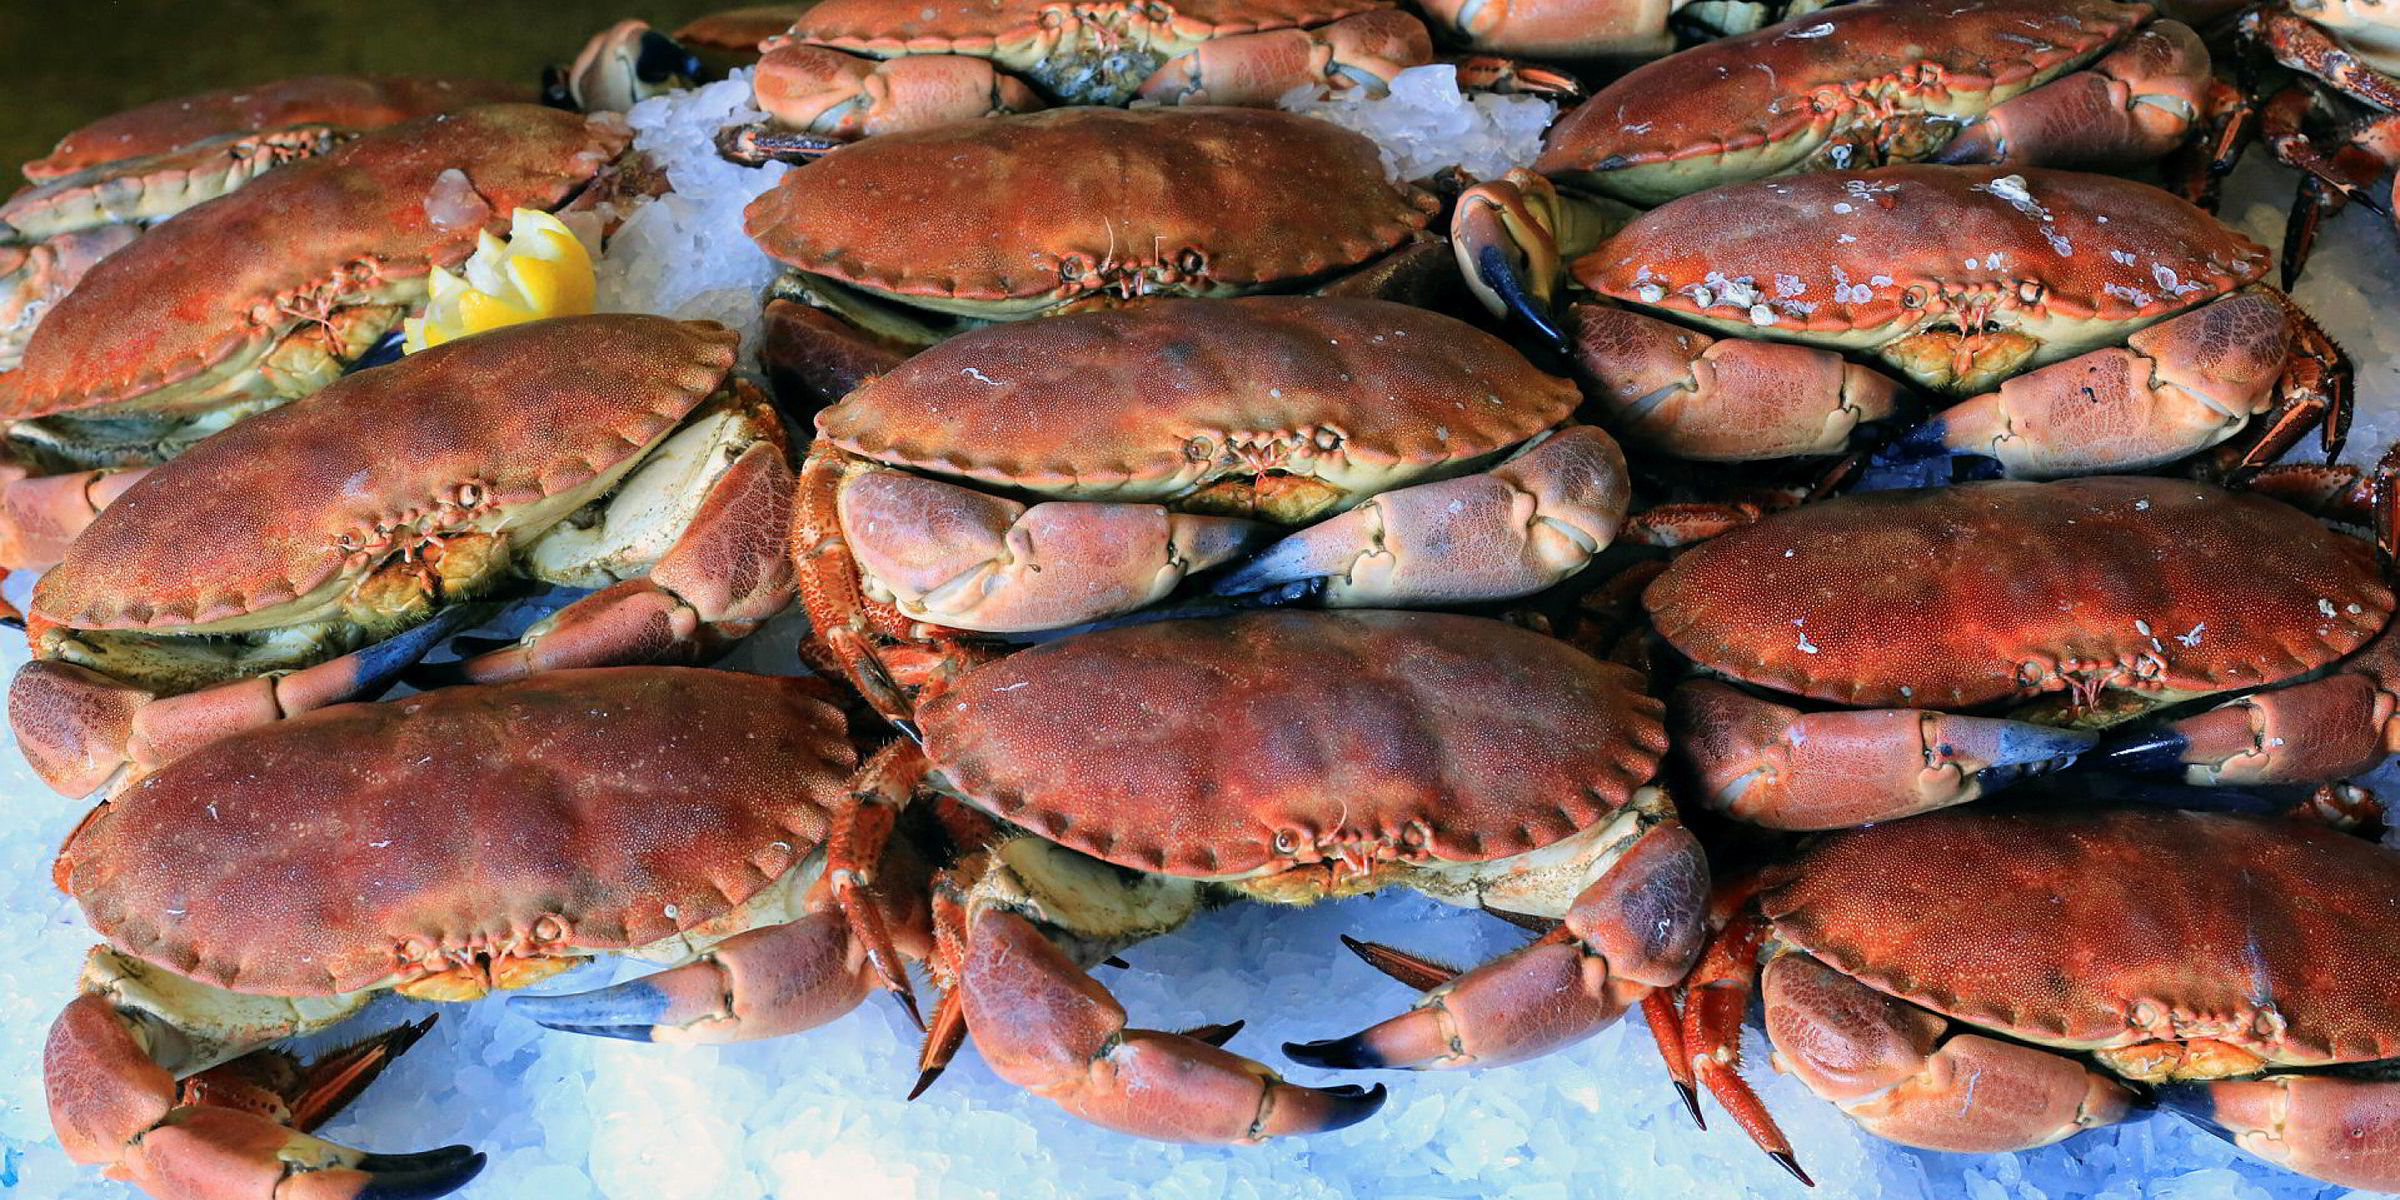 California considers delaying Dungeness crab season opener Intrafish